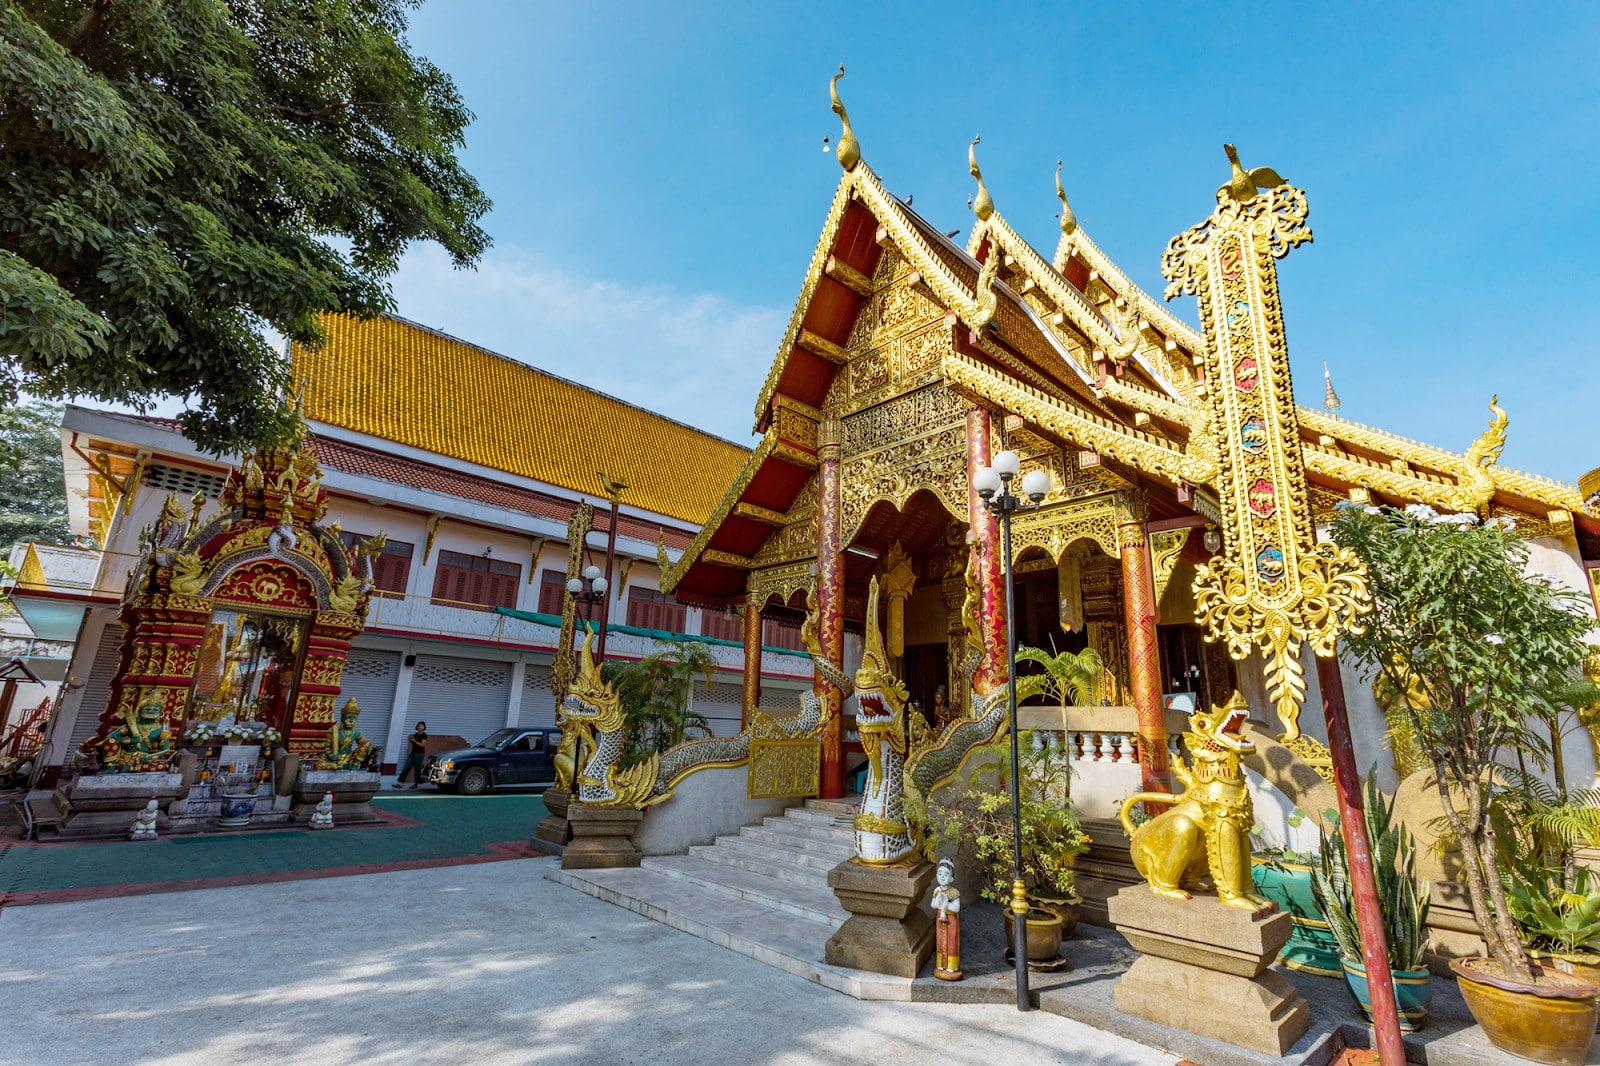 The Wat Klang Wiang in Chiang Rai